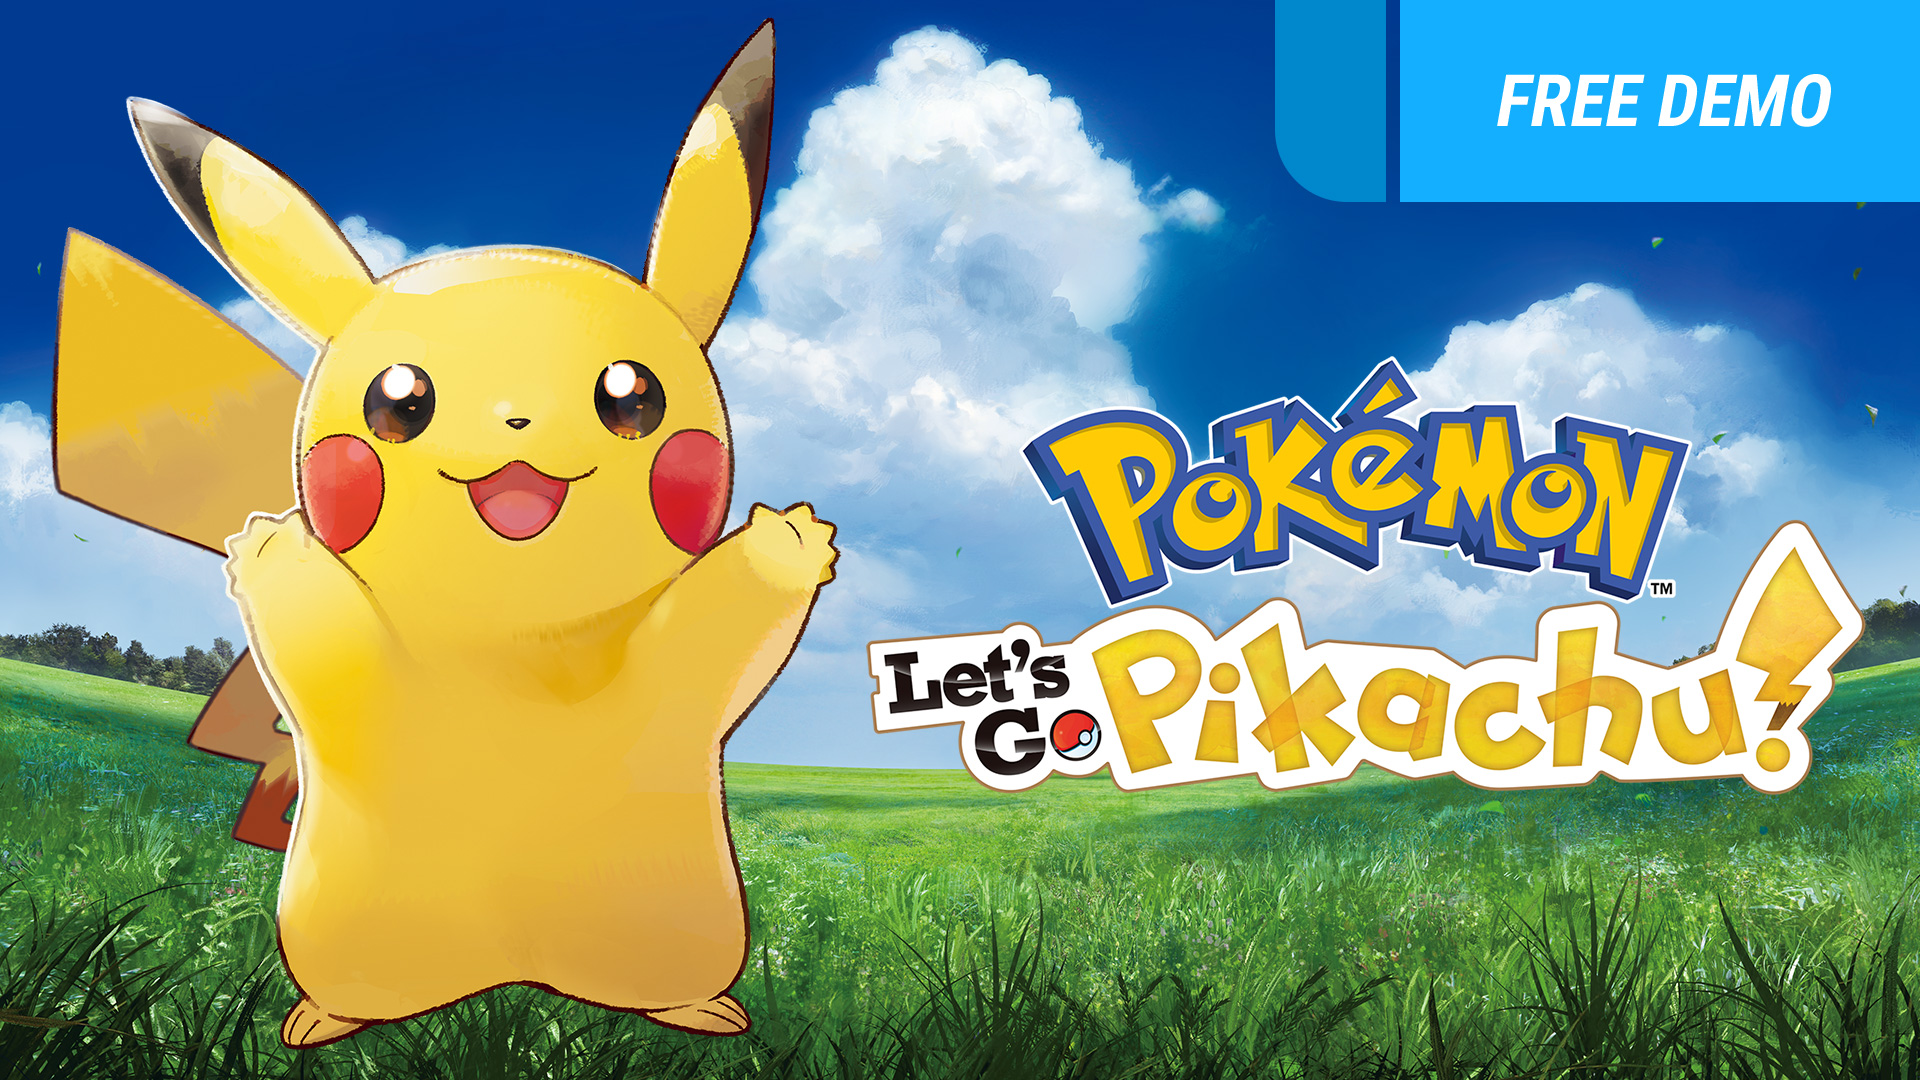 Pokémon: Let's Go, Pikachu!